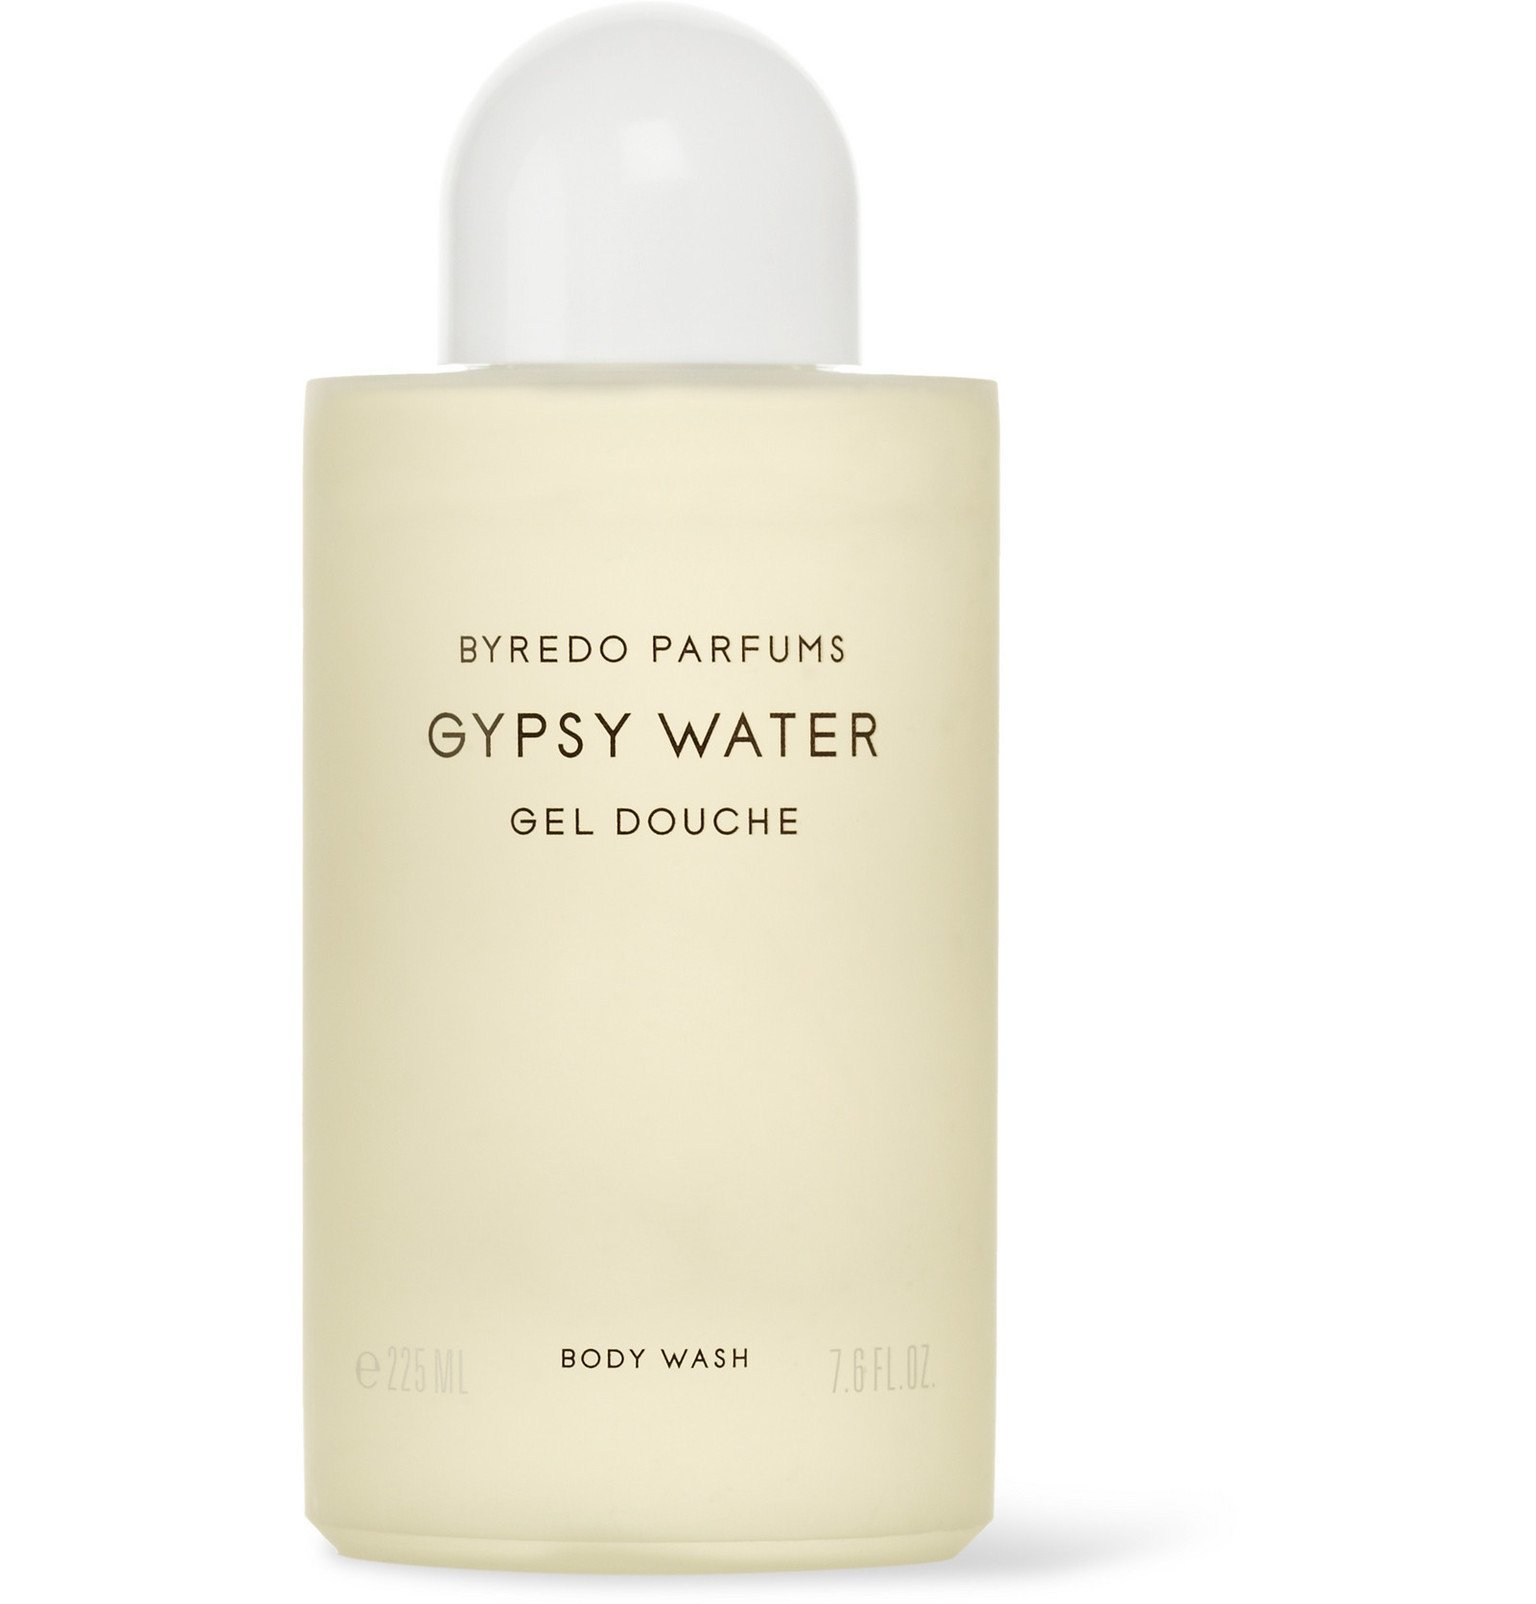 Byredo - Gypsy Water Body Wash, 225ml - Colorless Byredo